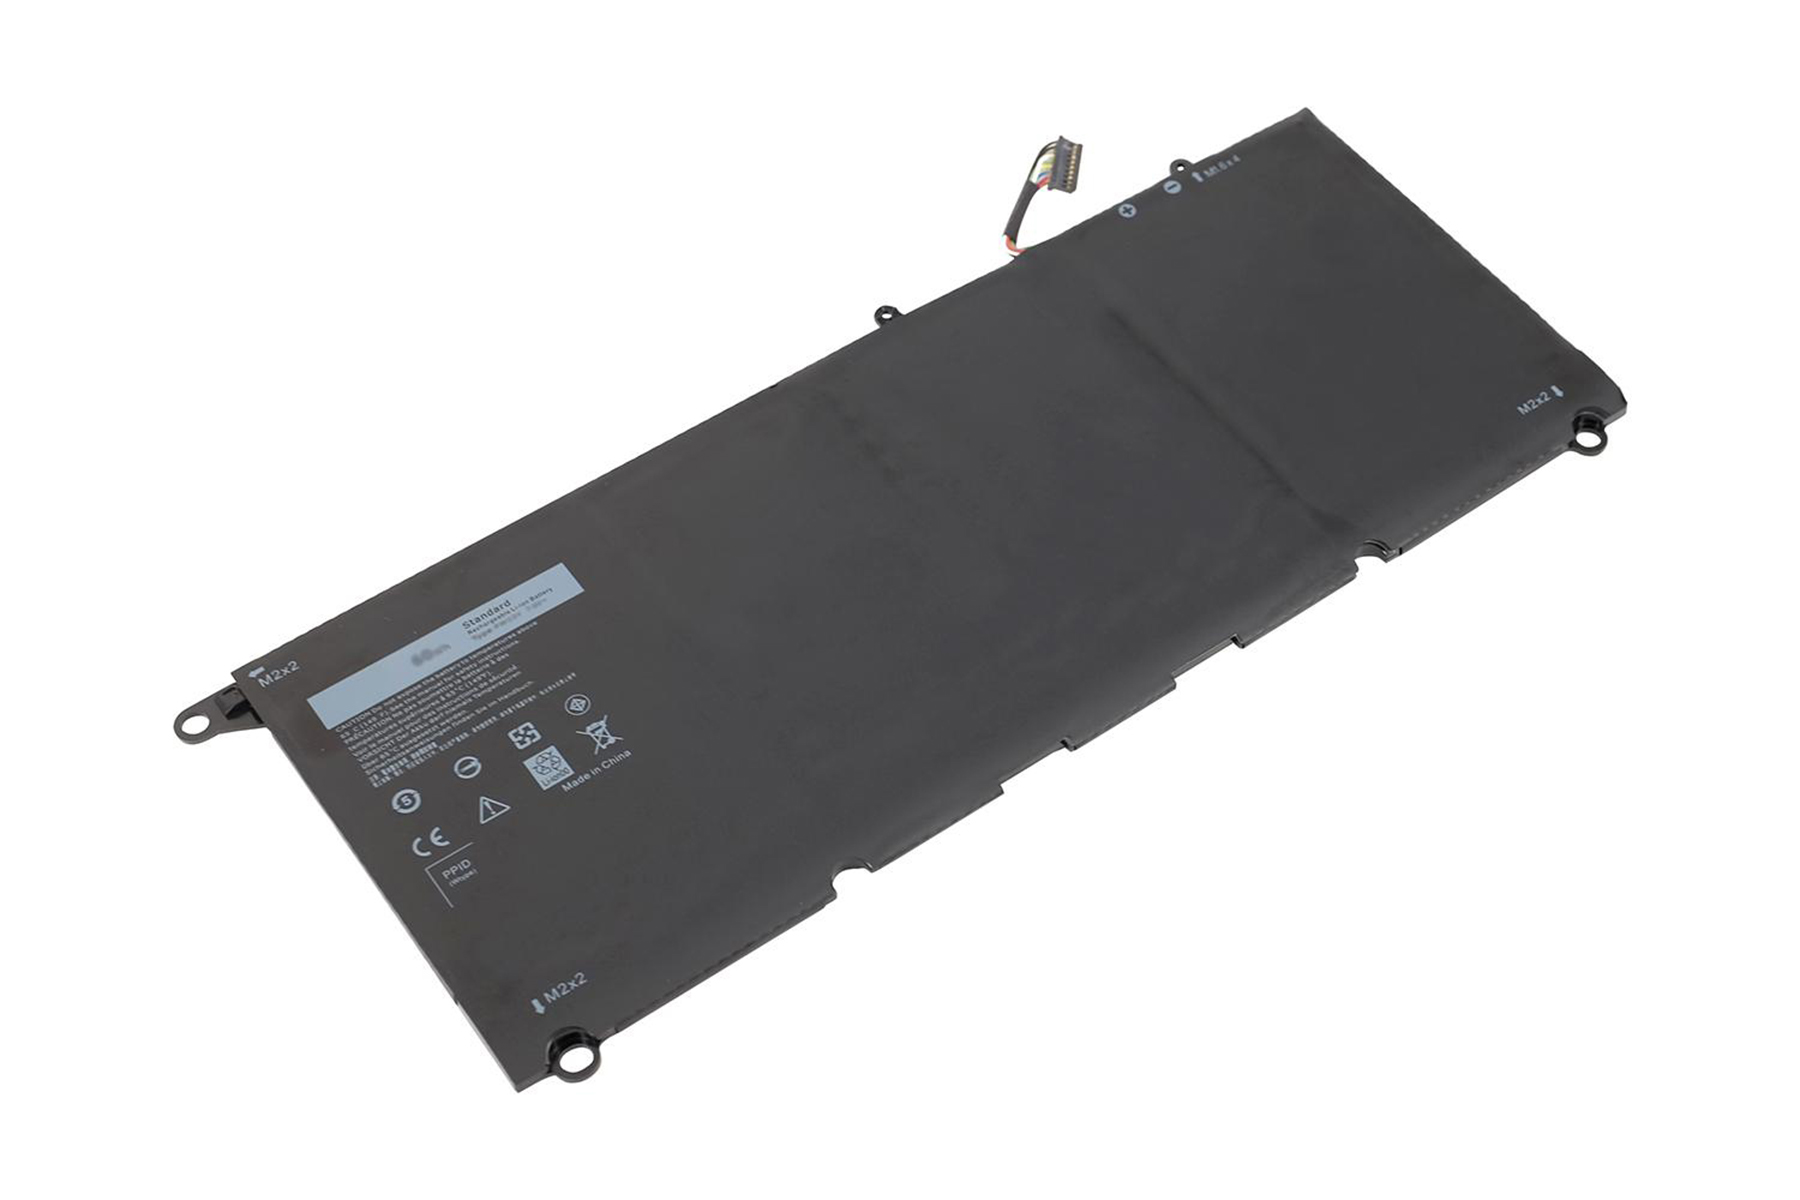 POWERSMART für Dell XPS Volt, 7850 13-9360-D1505G XPS Laptop Akku, mAh Li-Polymer 9360, 13 7.60